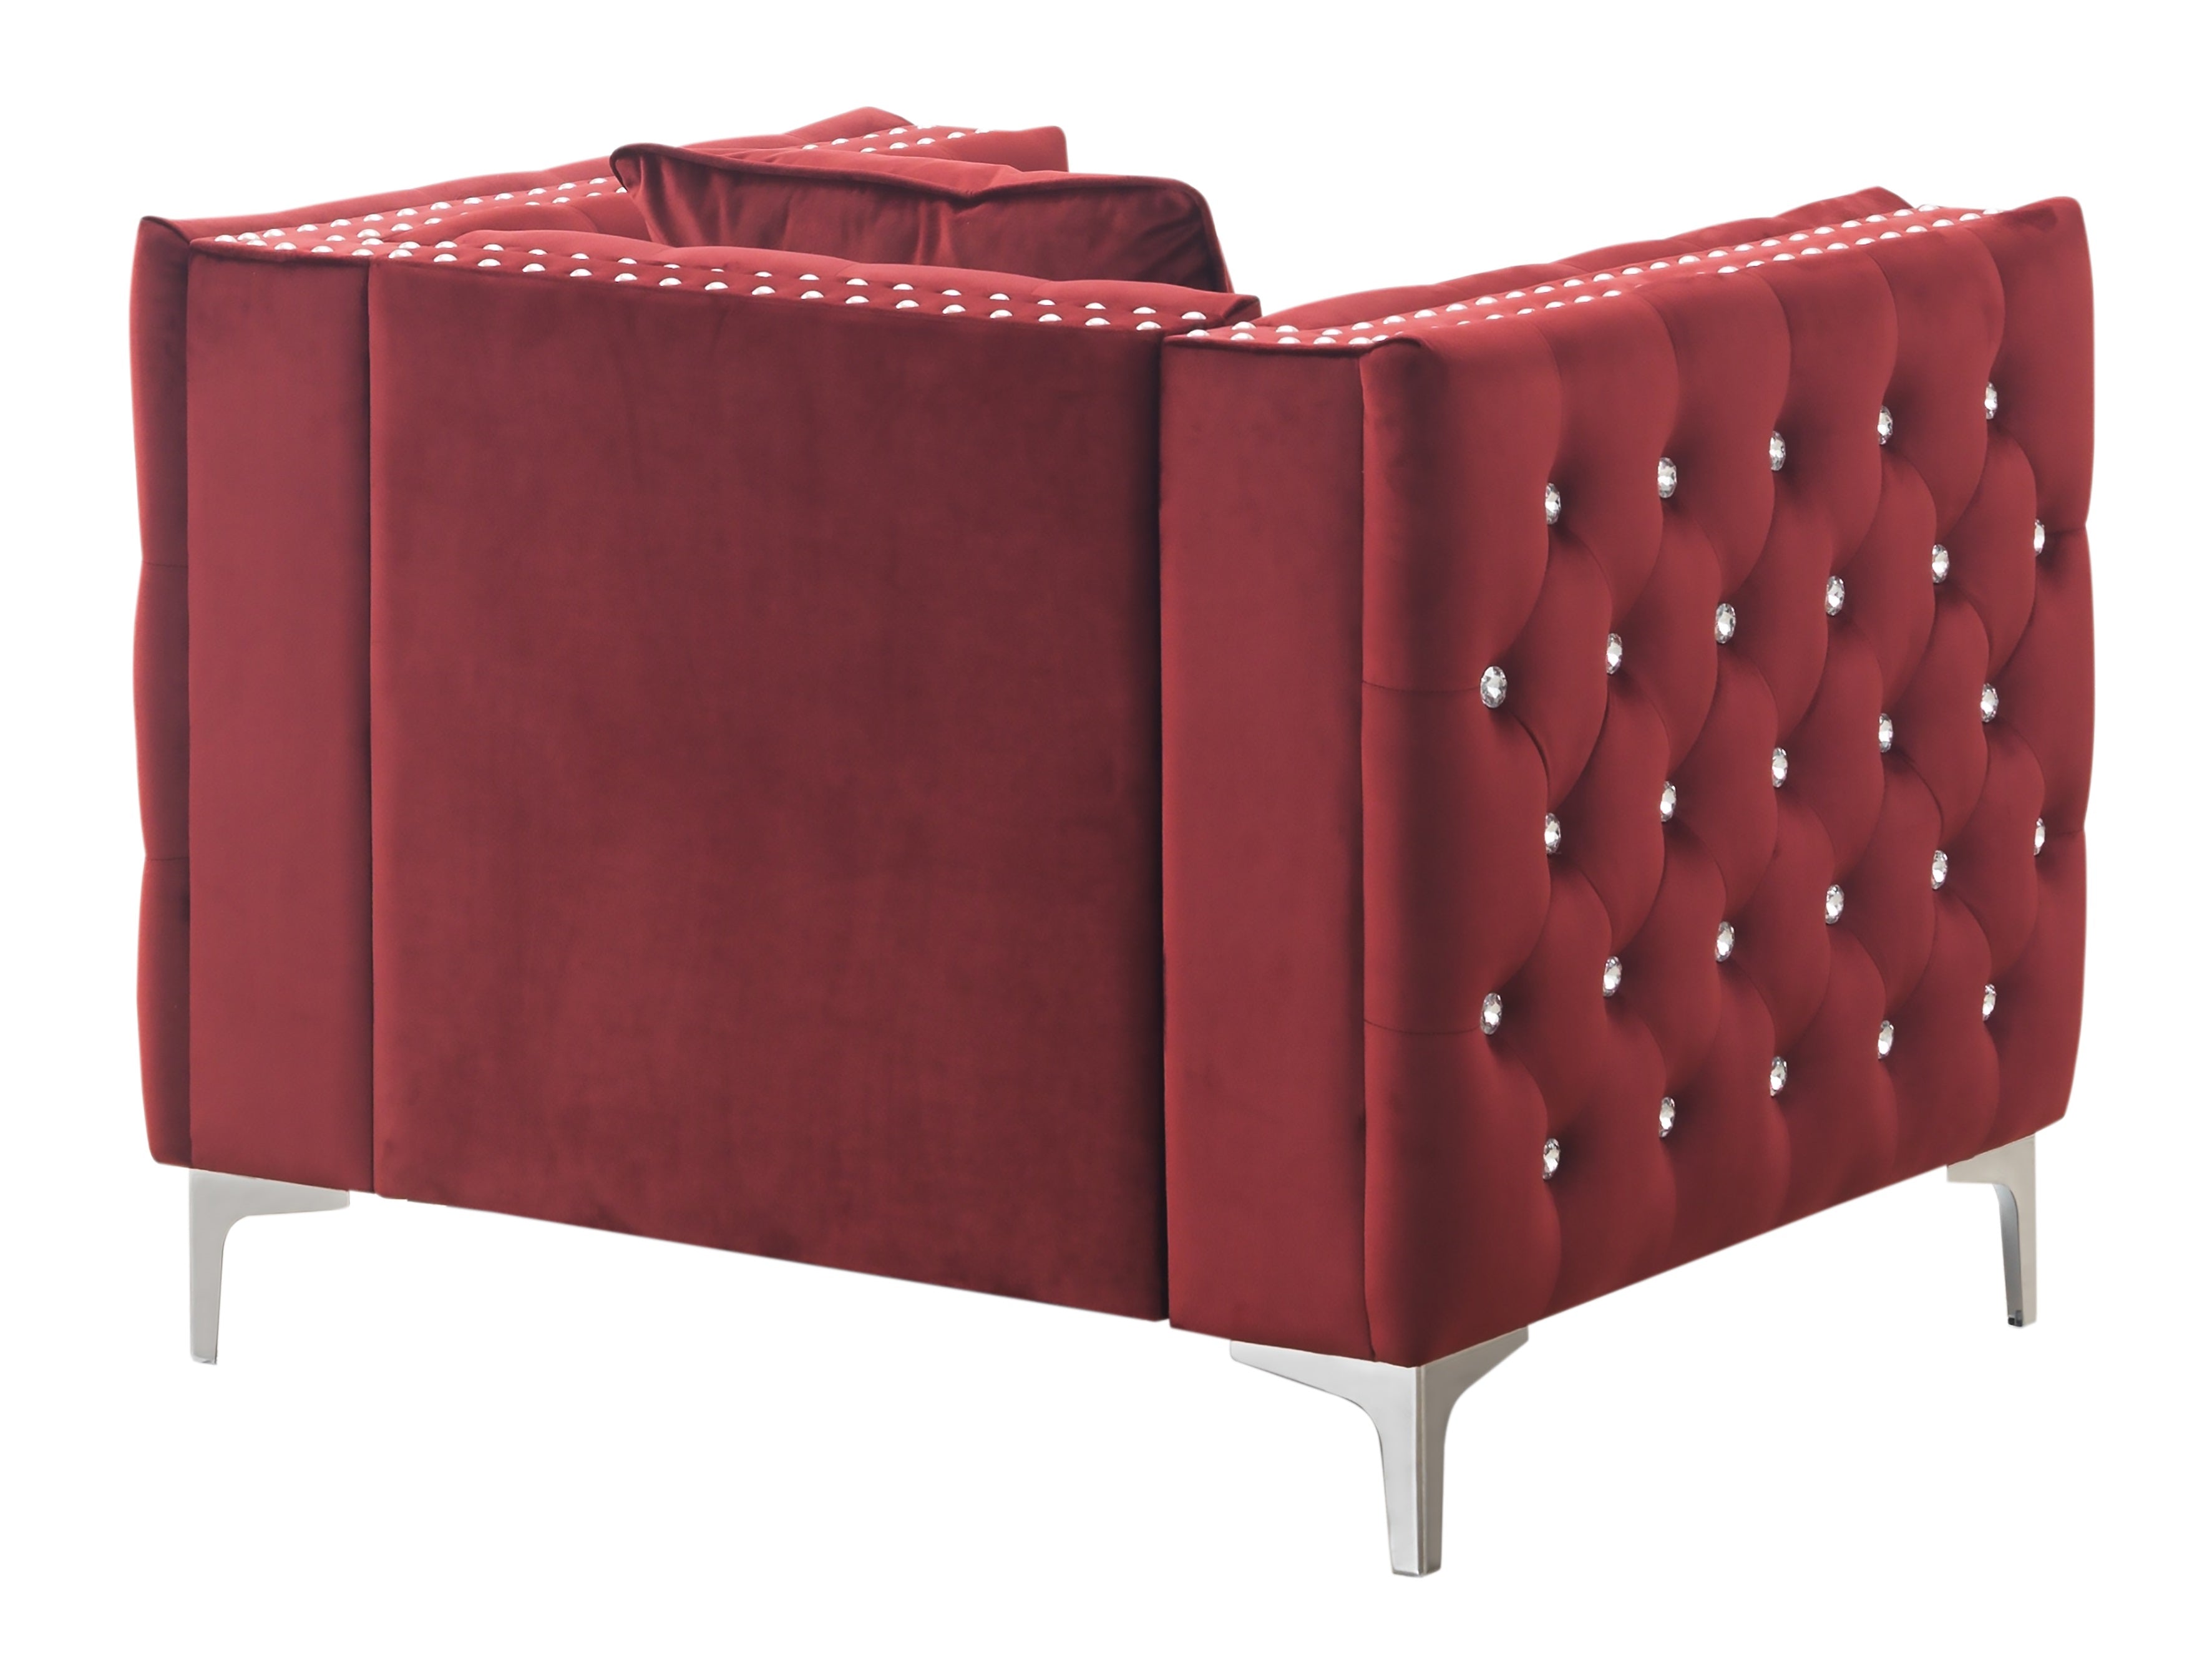 ZNTS Glory Furniture Paige G826A-C Chair , BURGUNDY B078108455